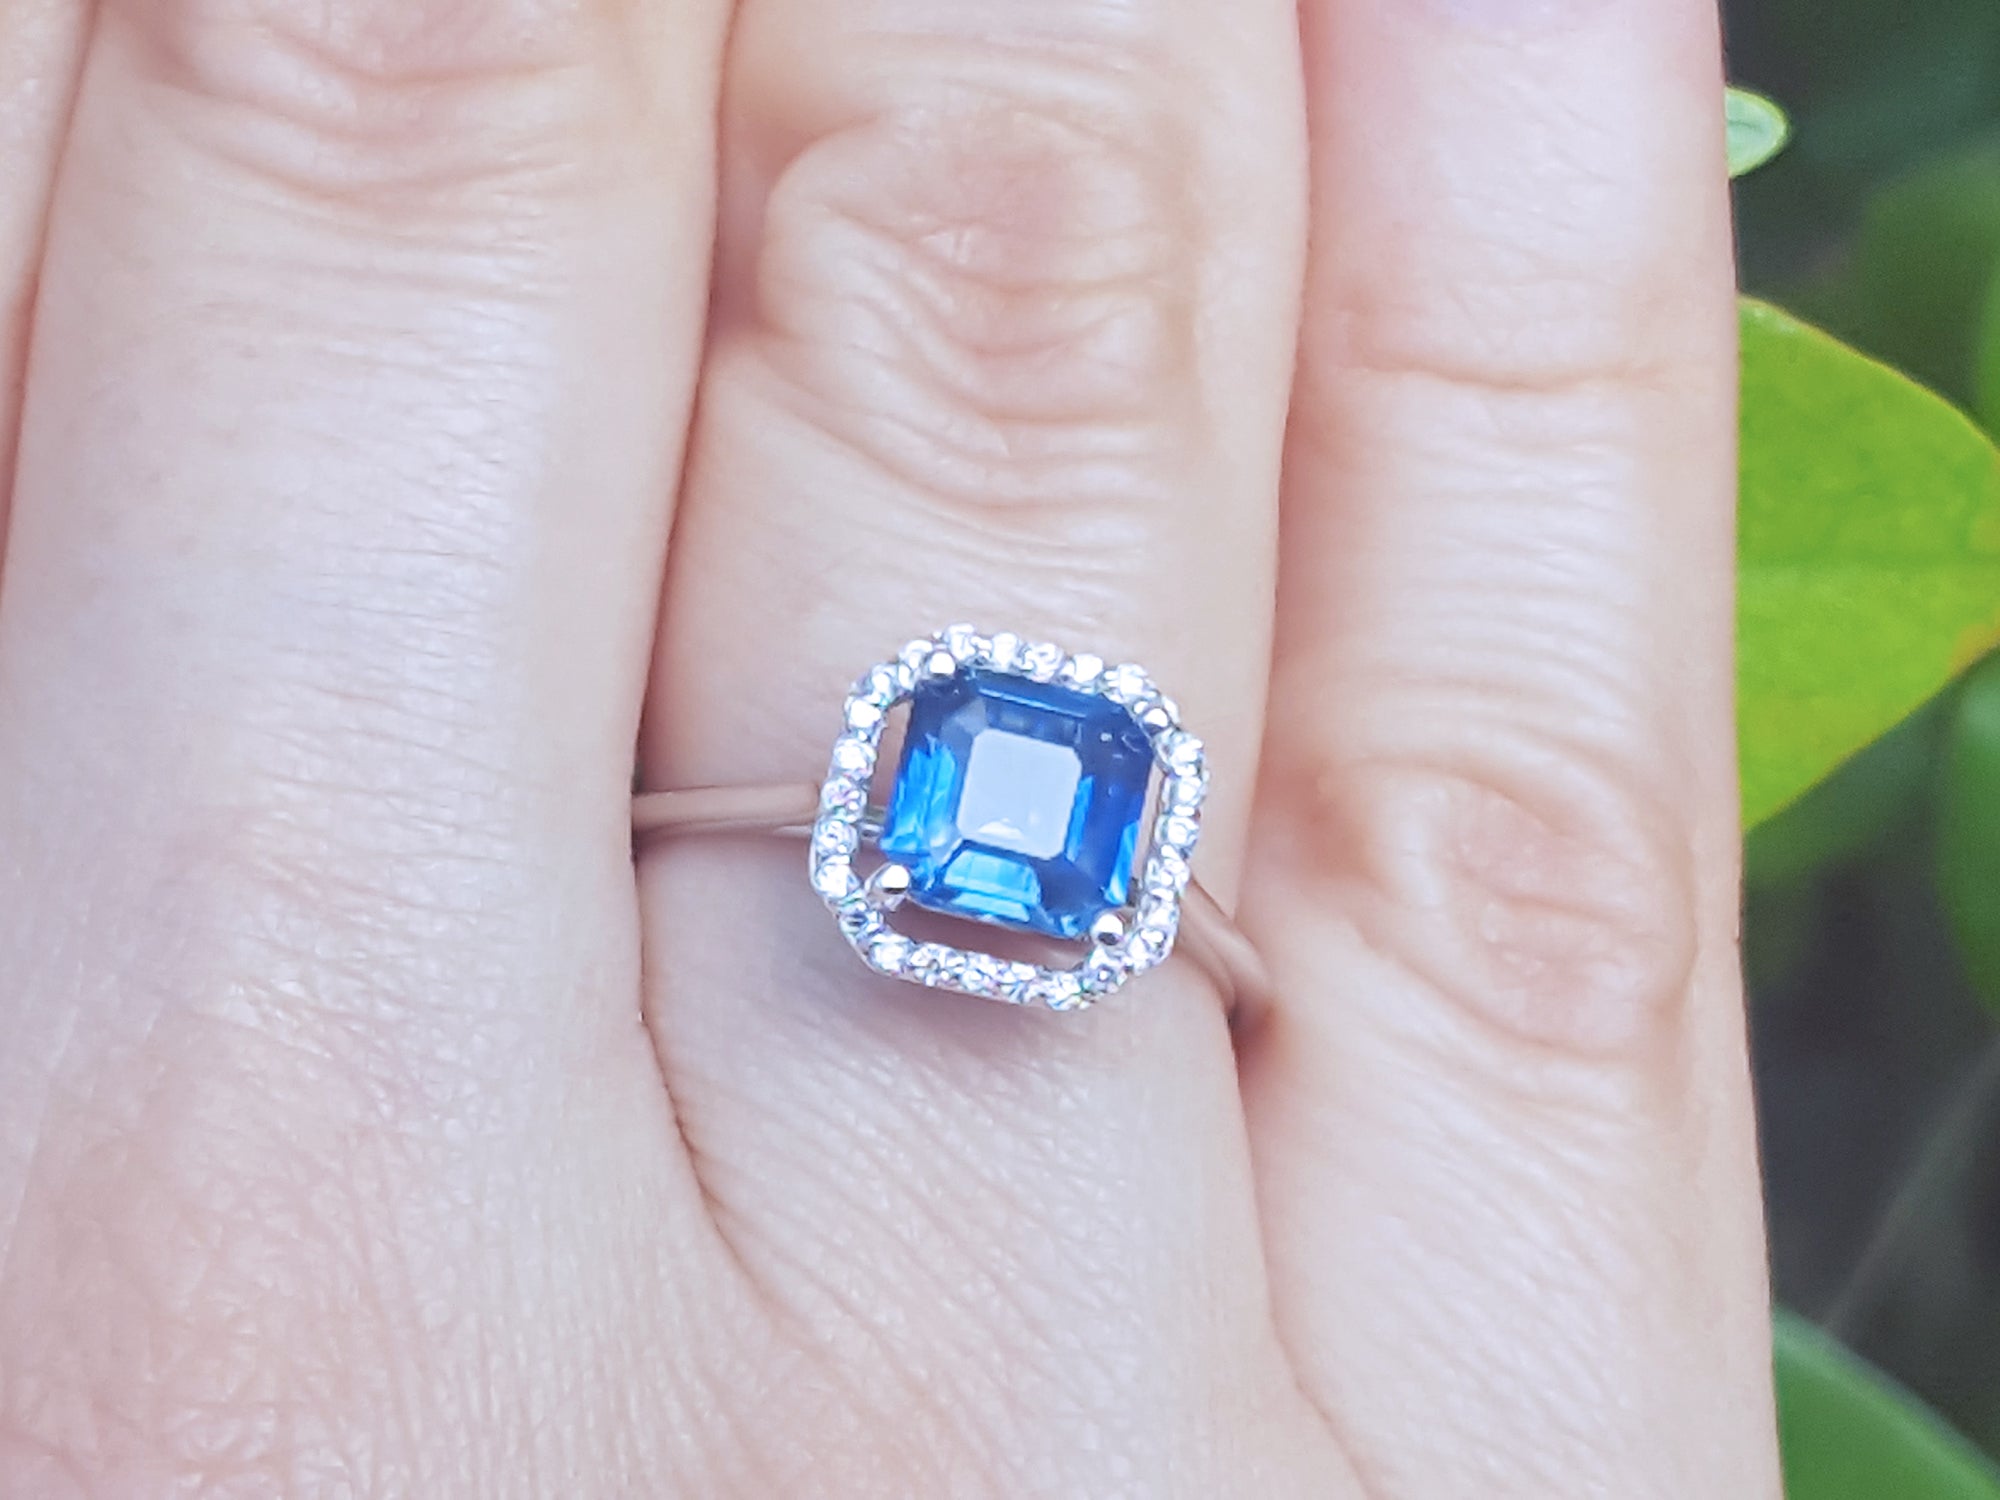 Sapphire and diamond fine jewelry ring